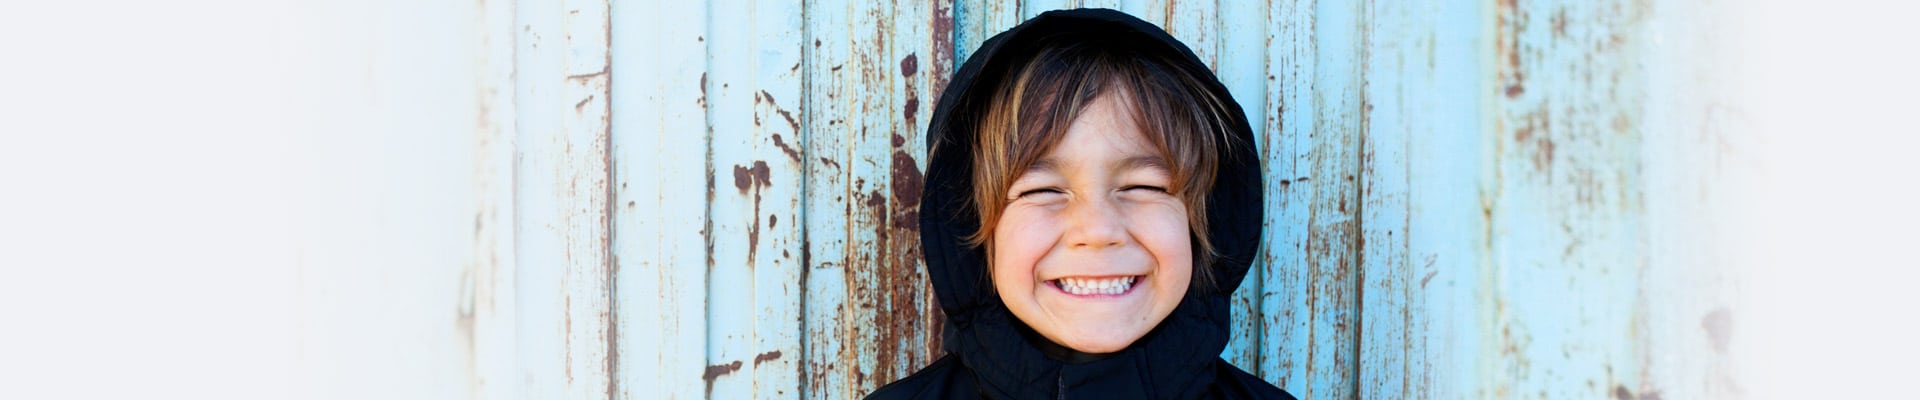 Kid smiling Escondido Children's Dental in Escondido, CA